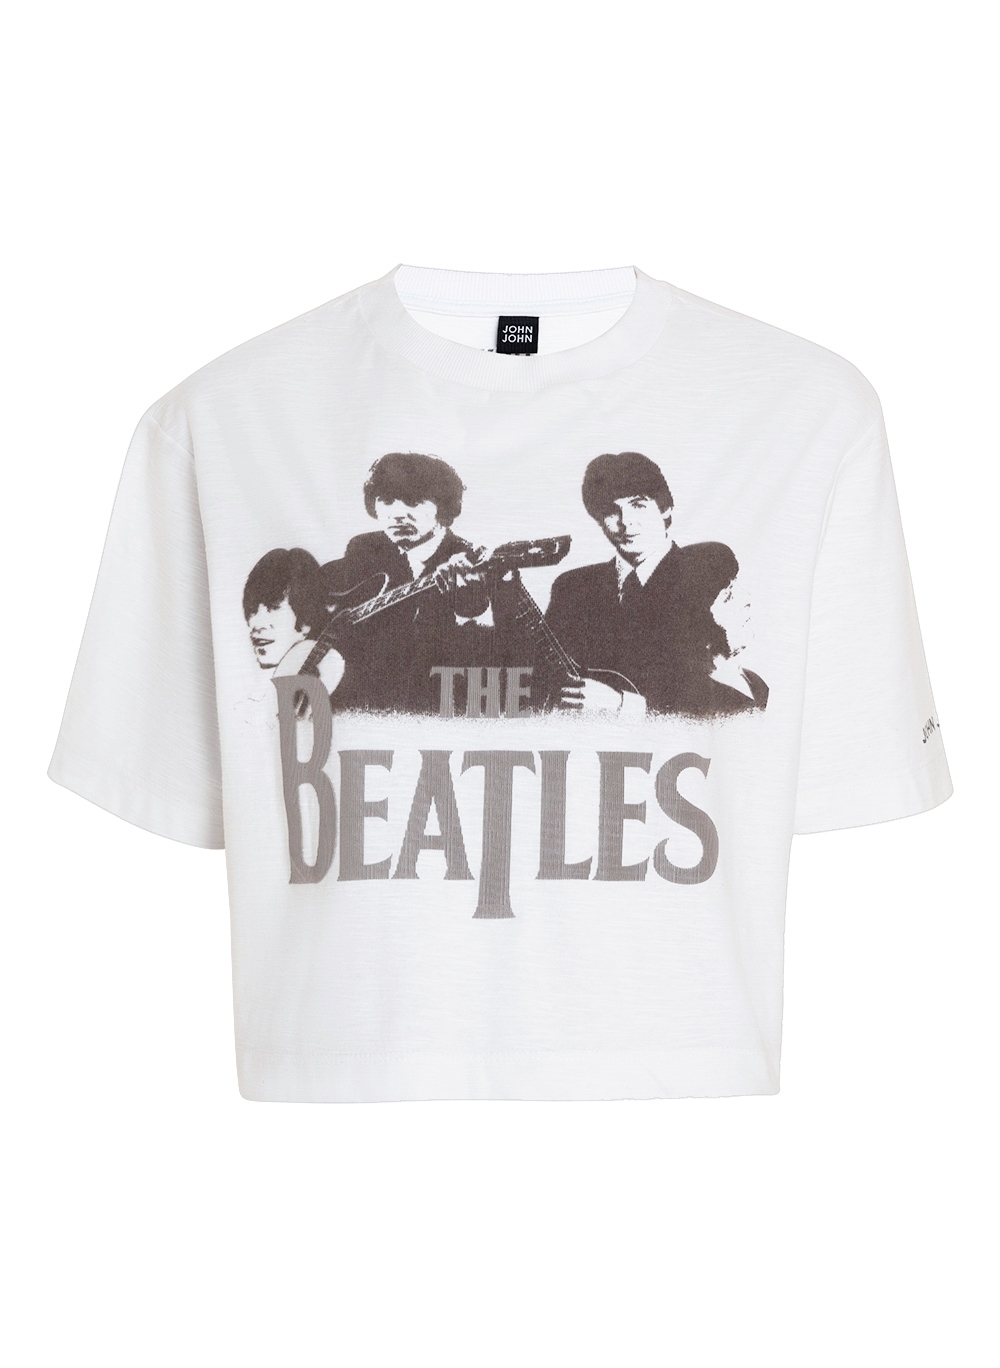 Camiseta Band John John Beatles Feminina 03.02.2229 - Camiseta